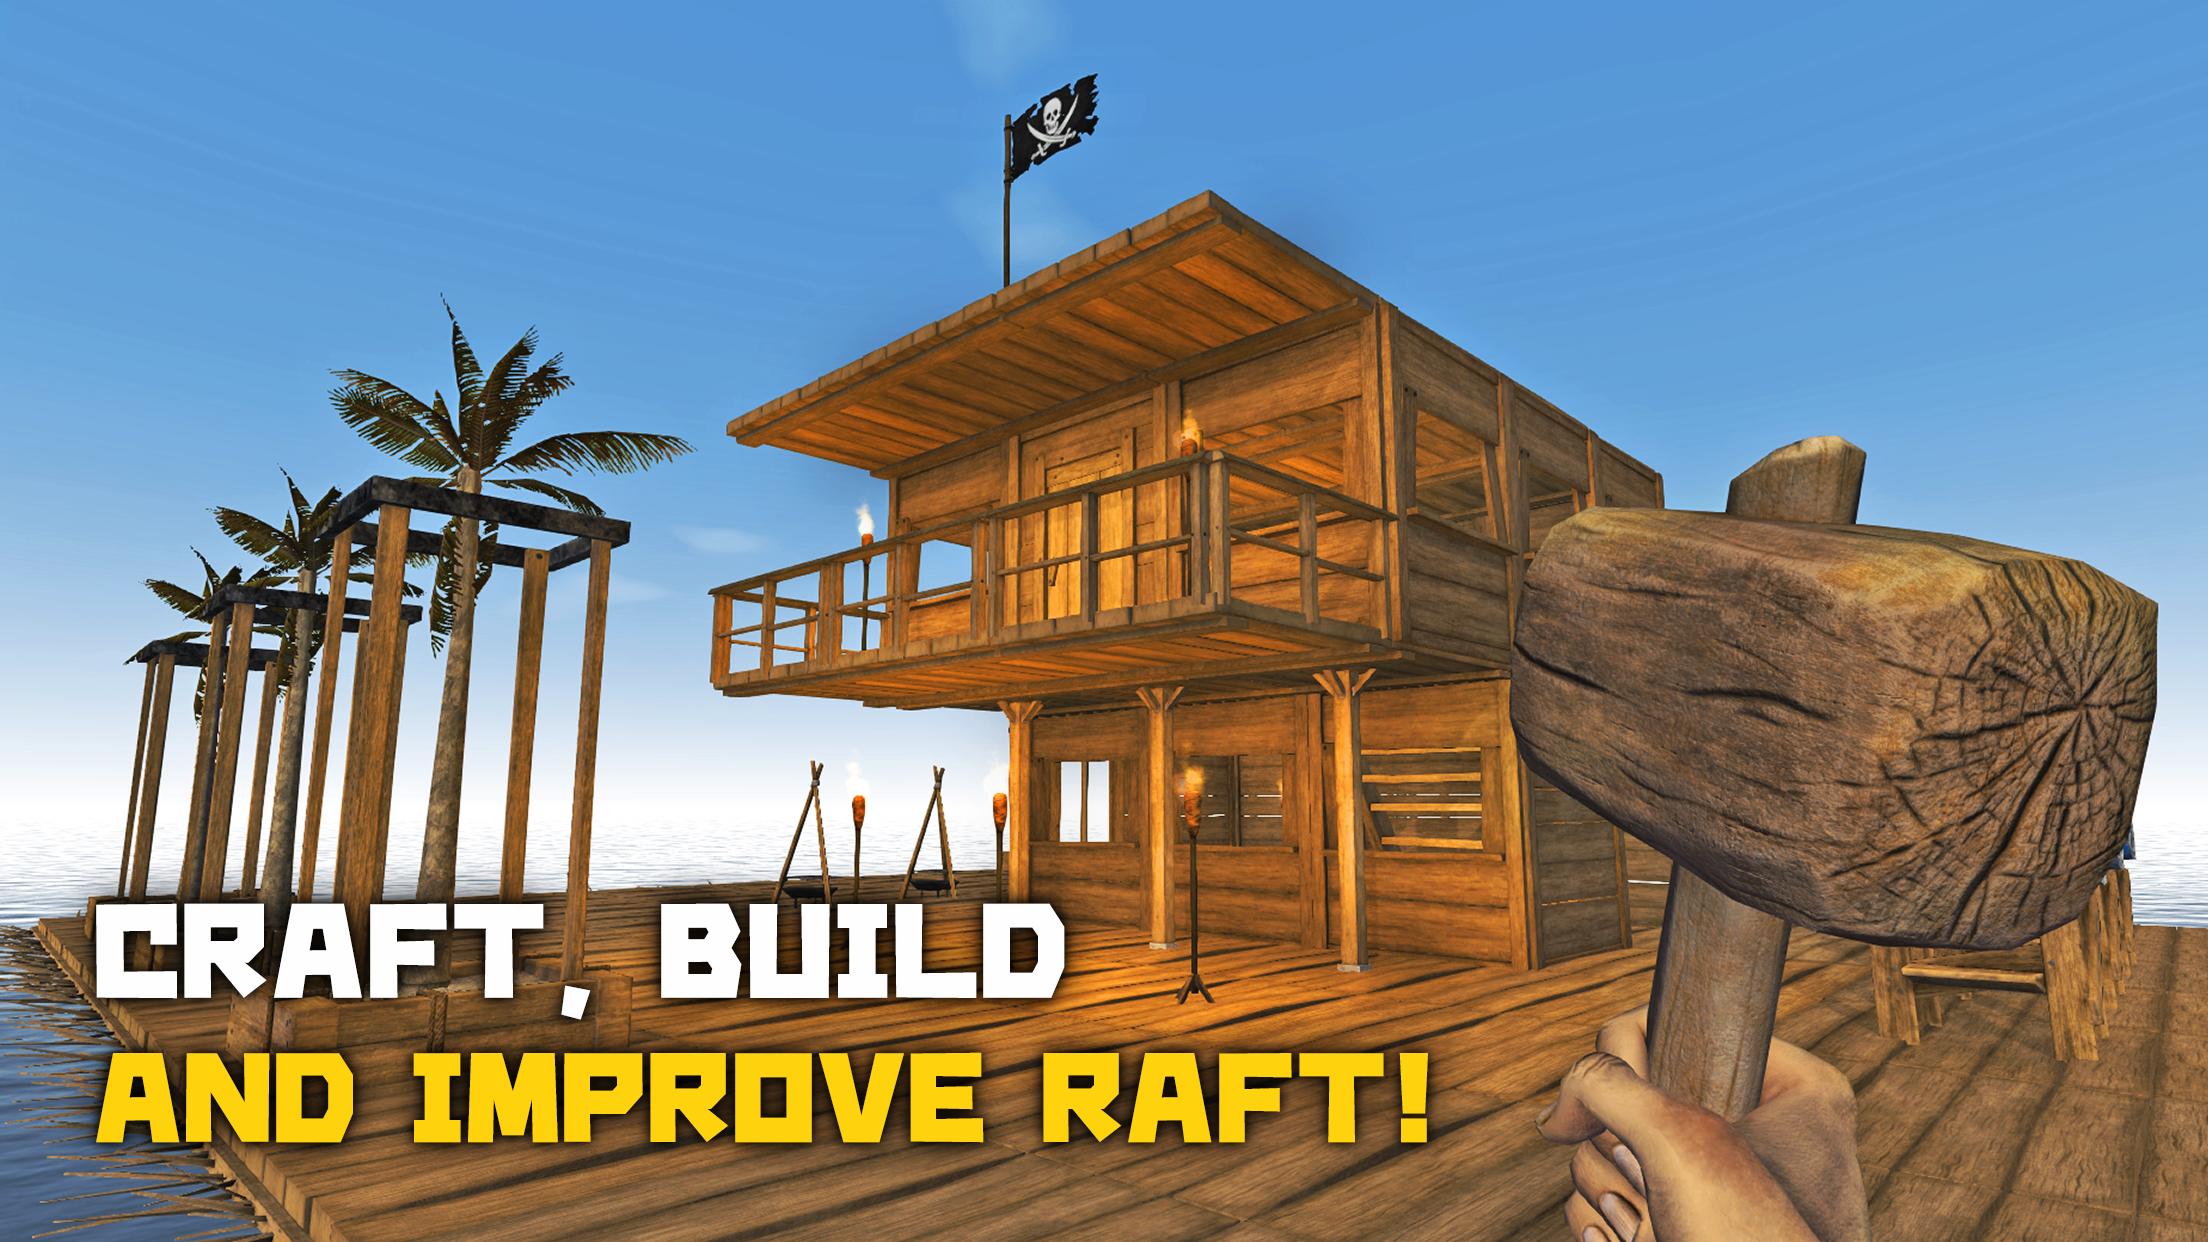 Craft Survival: Exploration, Building & Crafting Apk Download for